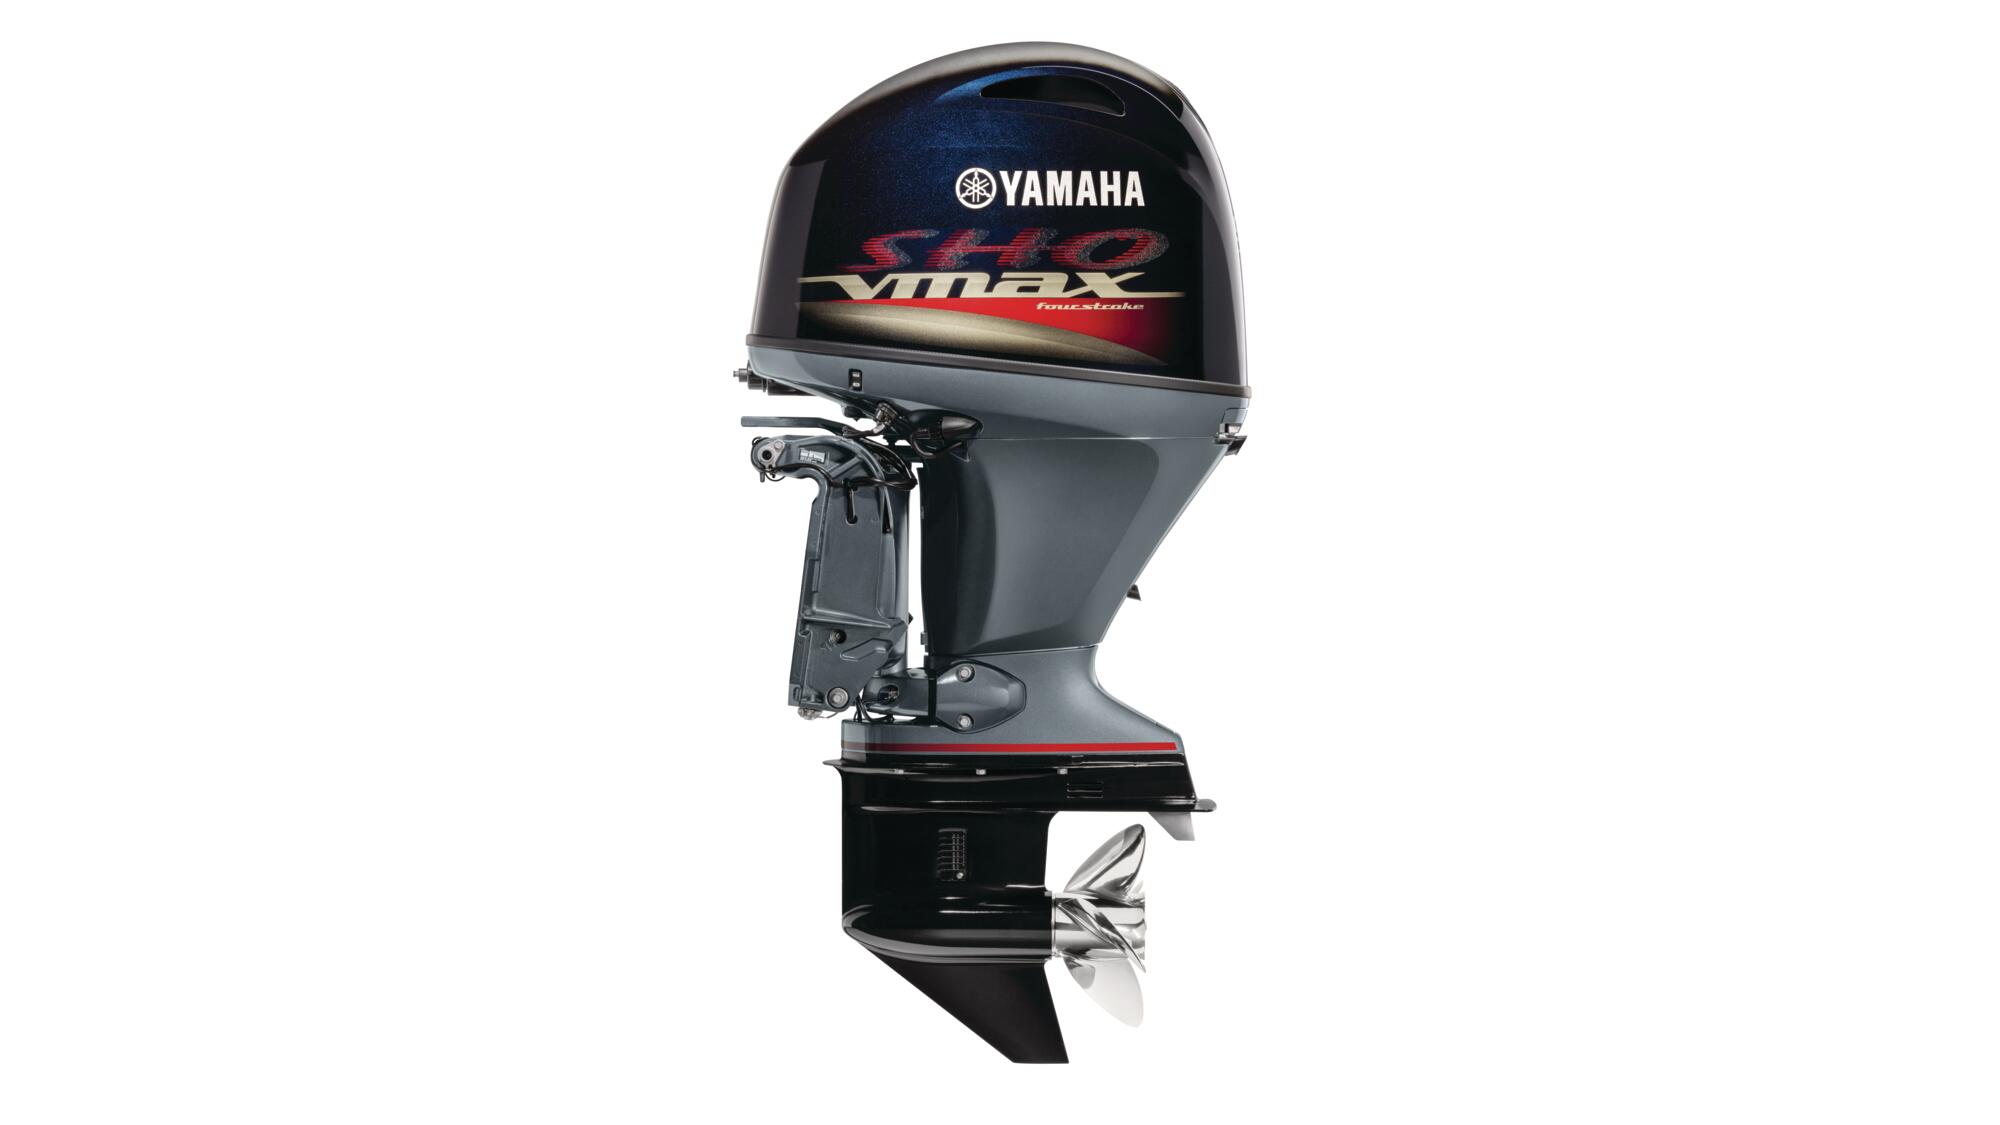 Unique Yamaha ‘V MAX SHO’ cowling design